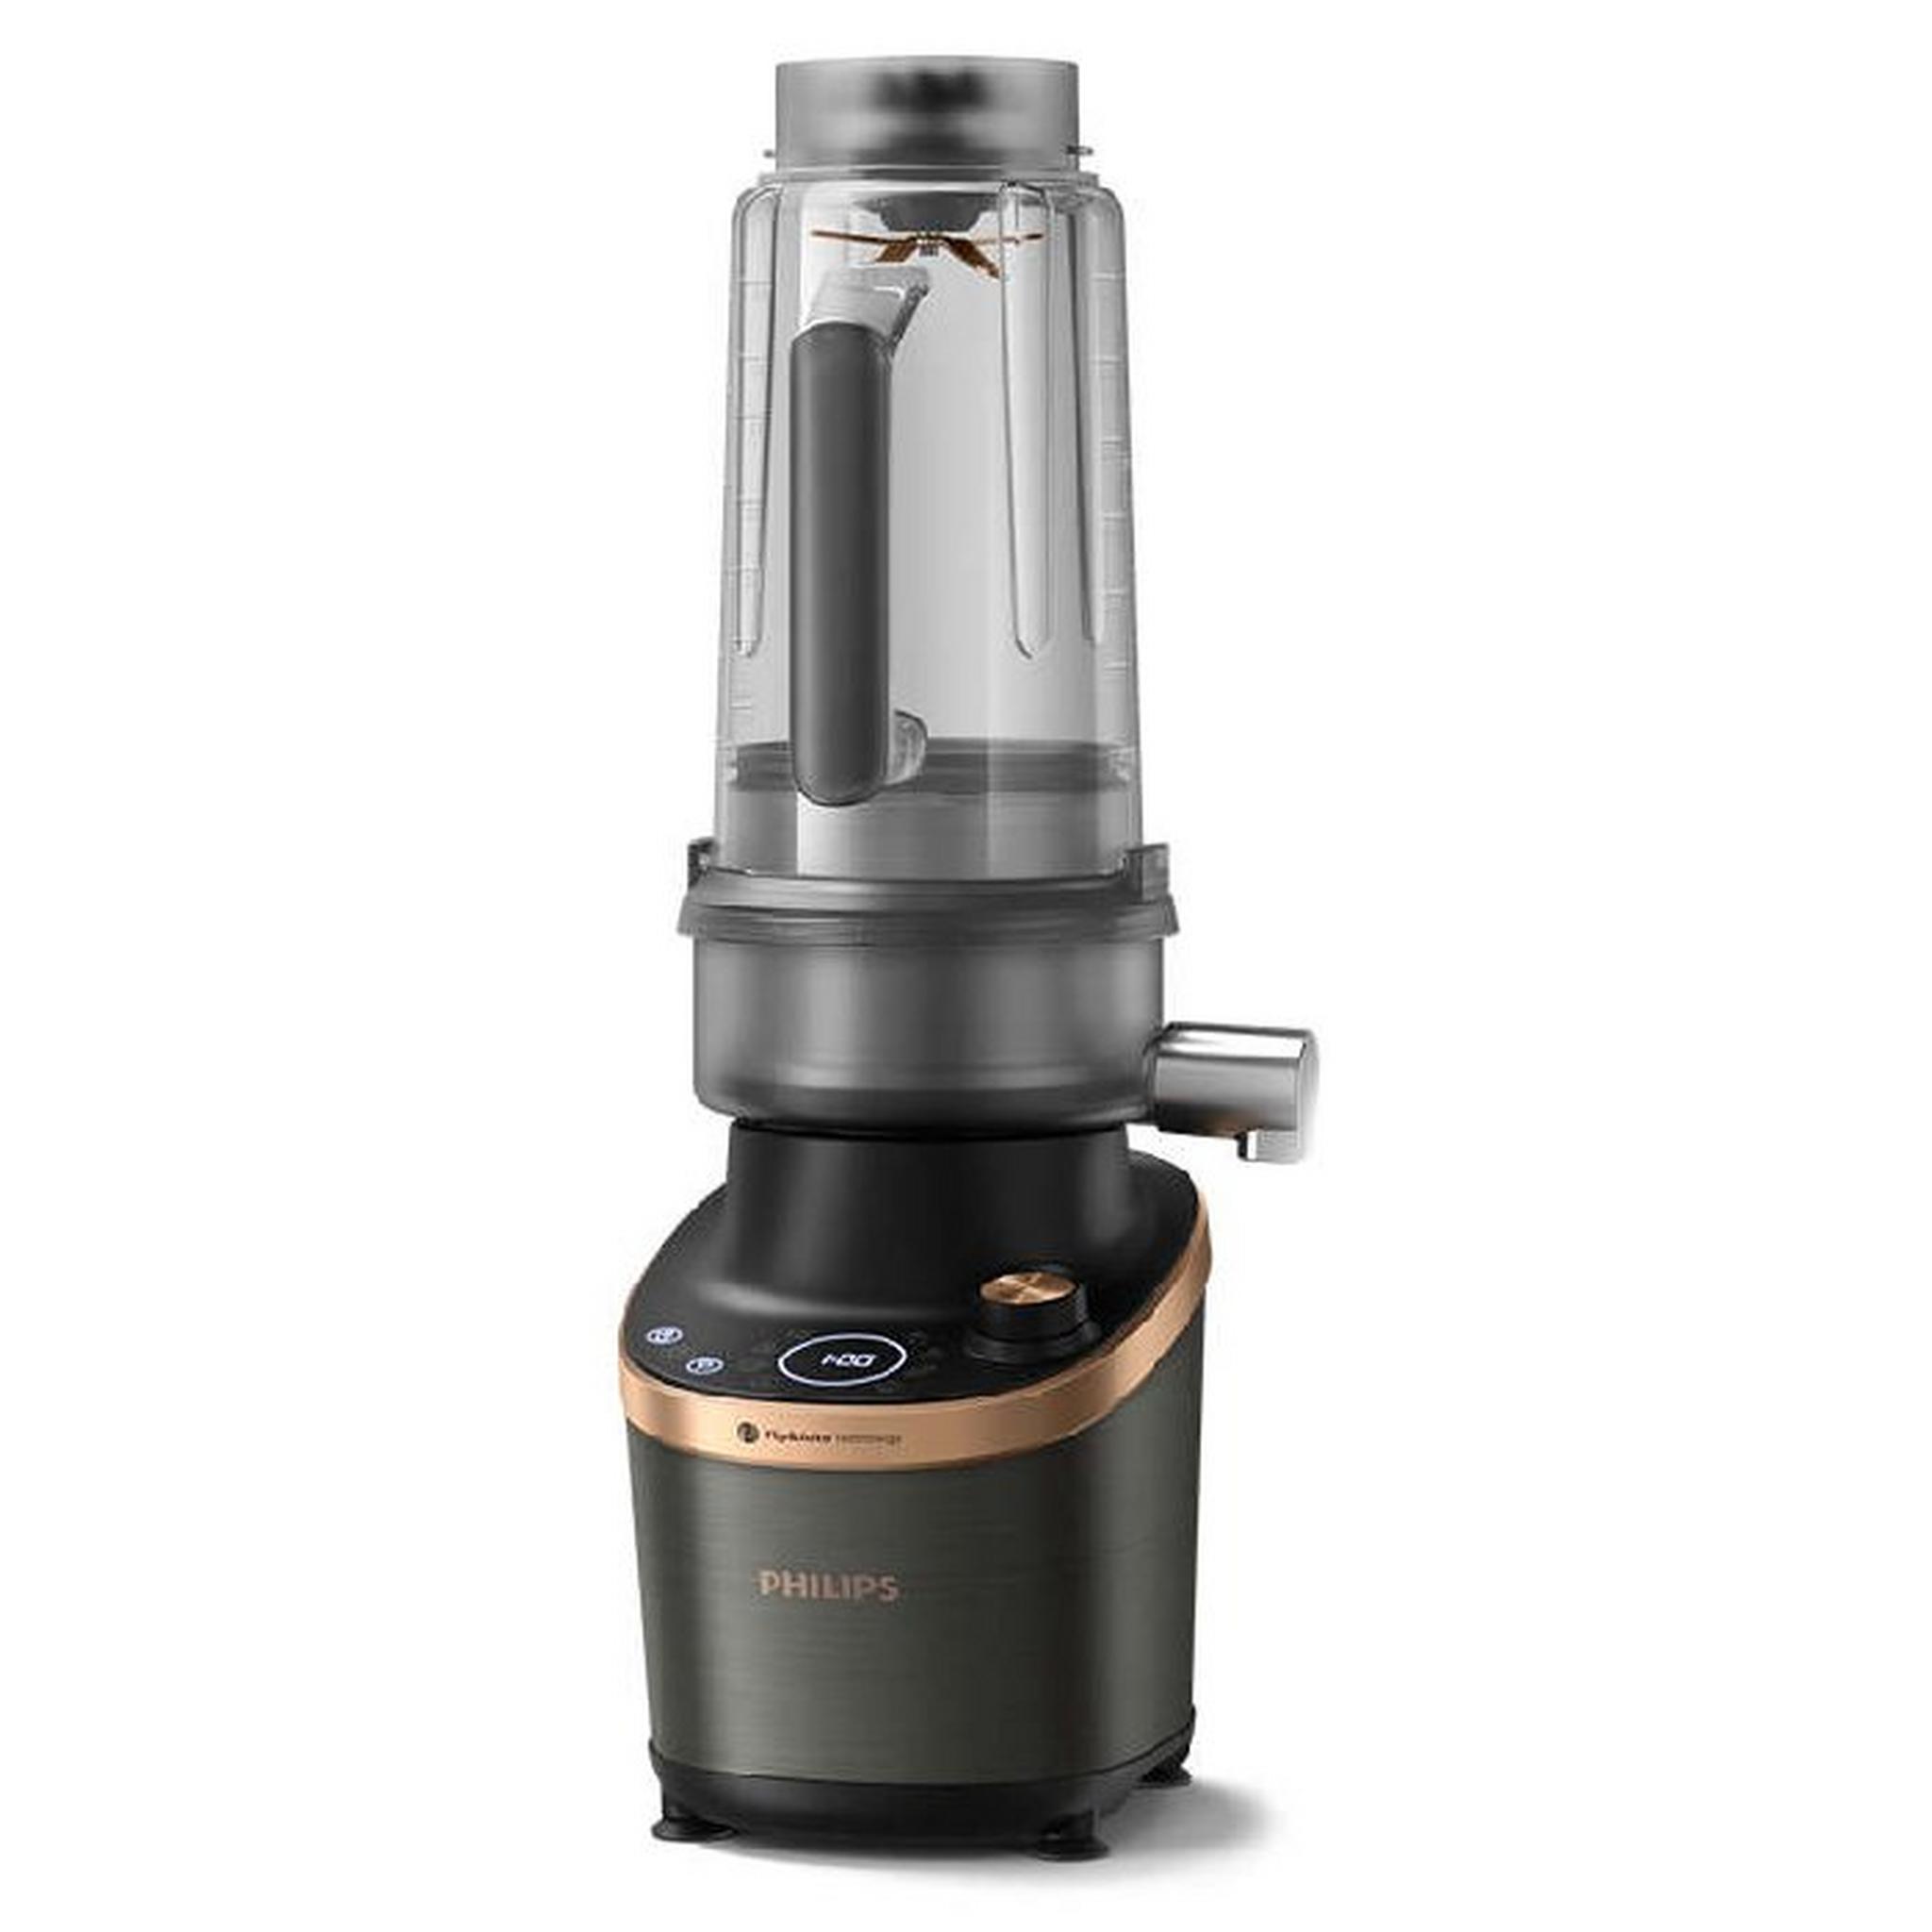 PHILIPS Flip&Juice Blender with Juicer Module, 1500 Watts, HR3770/00 - Black and Copper